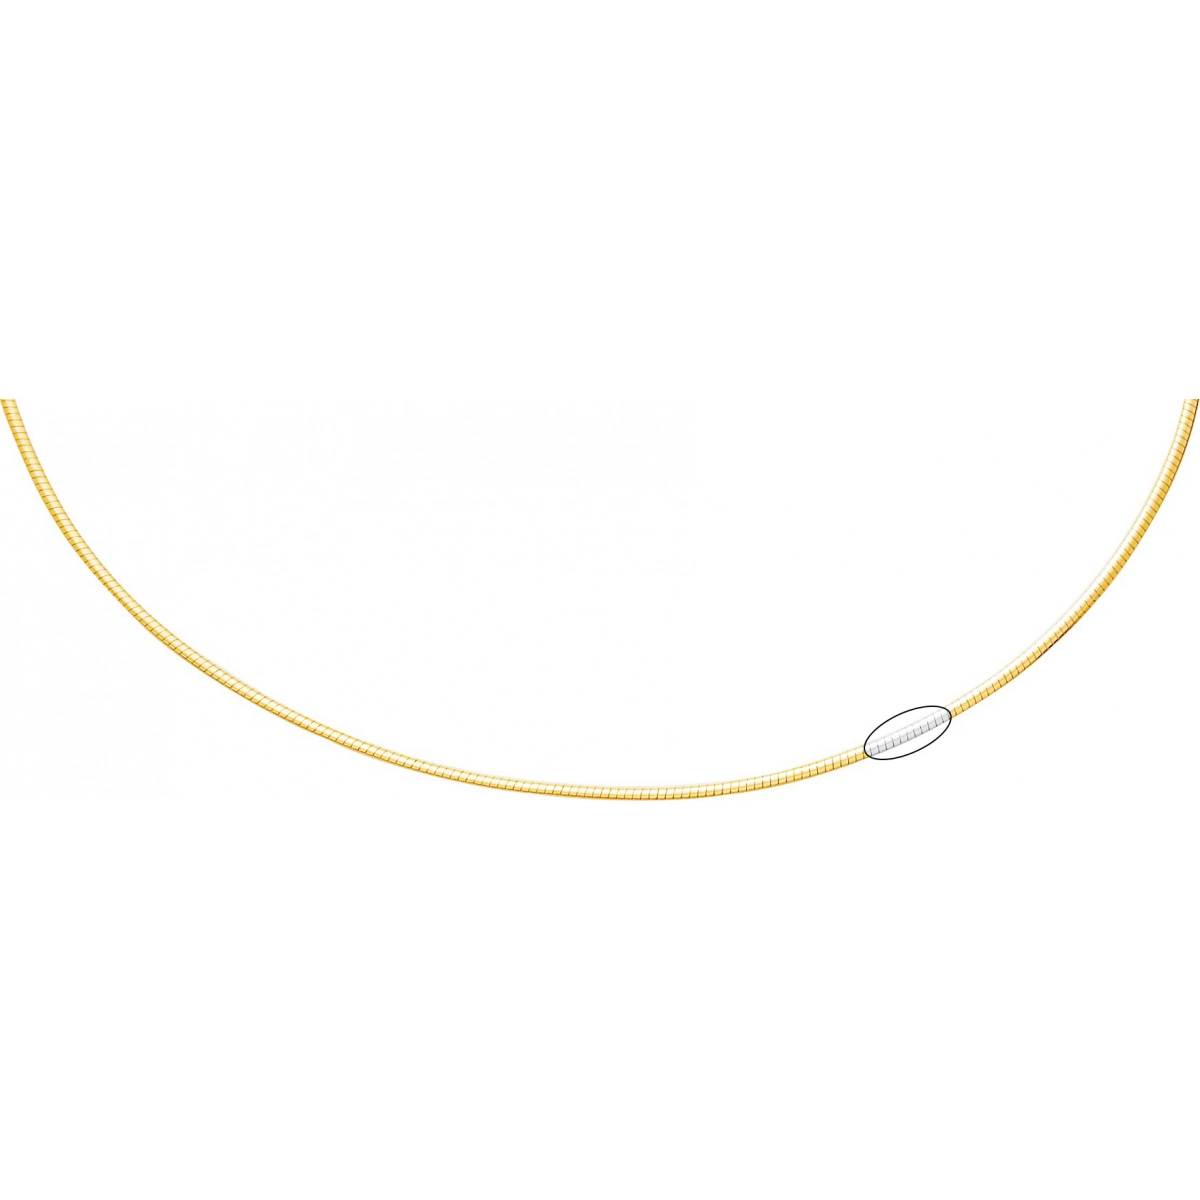 Necklace chain 'Avvolto' reversible 18K 2TG - Size: 42  Lua Blanca  2263.3.42